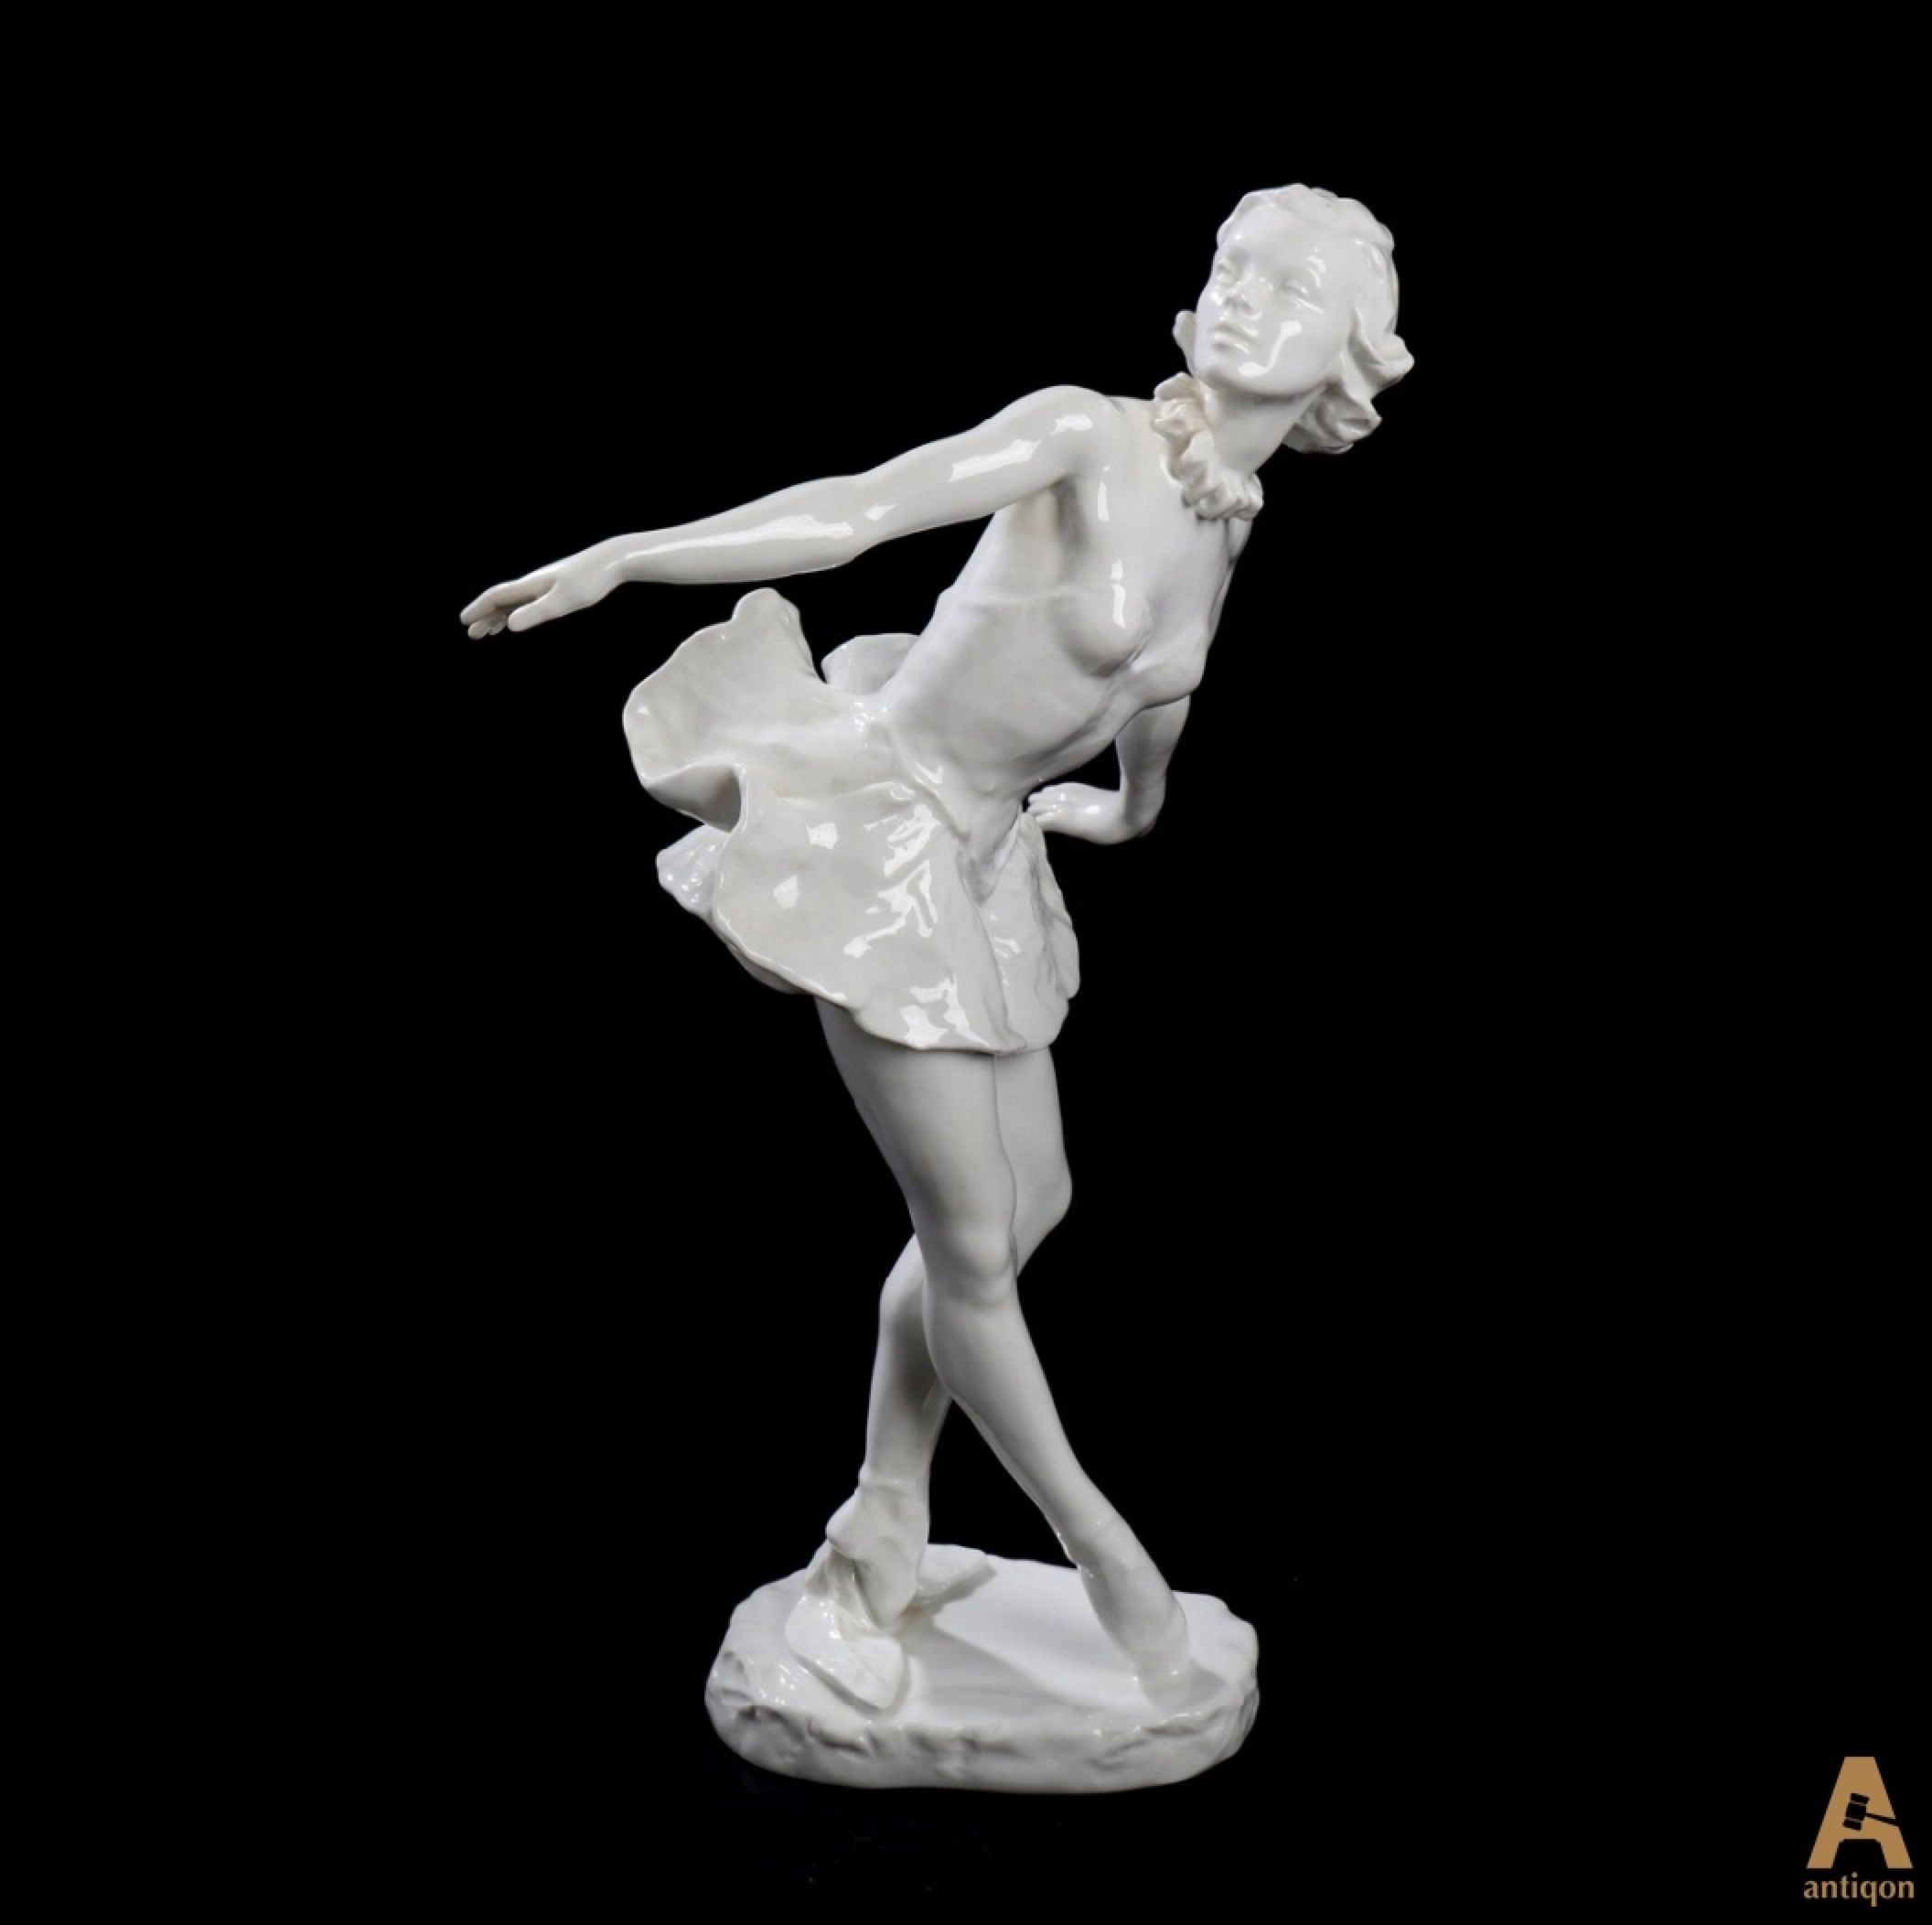 La-figurine-en-porcelaine-Ballerina